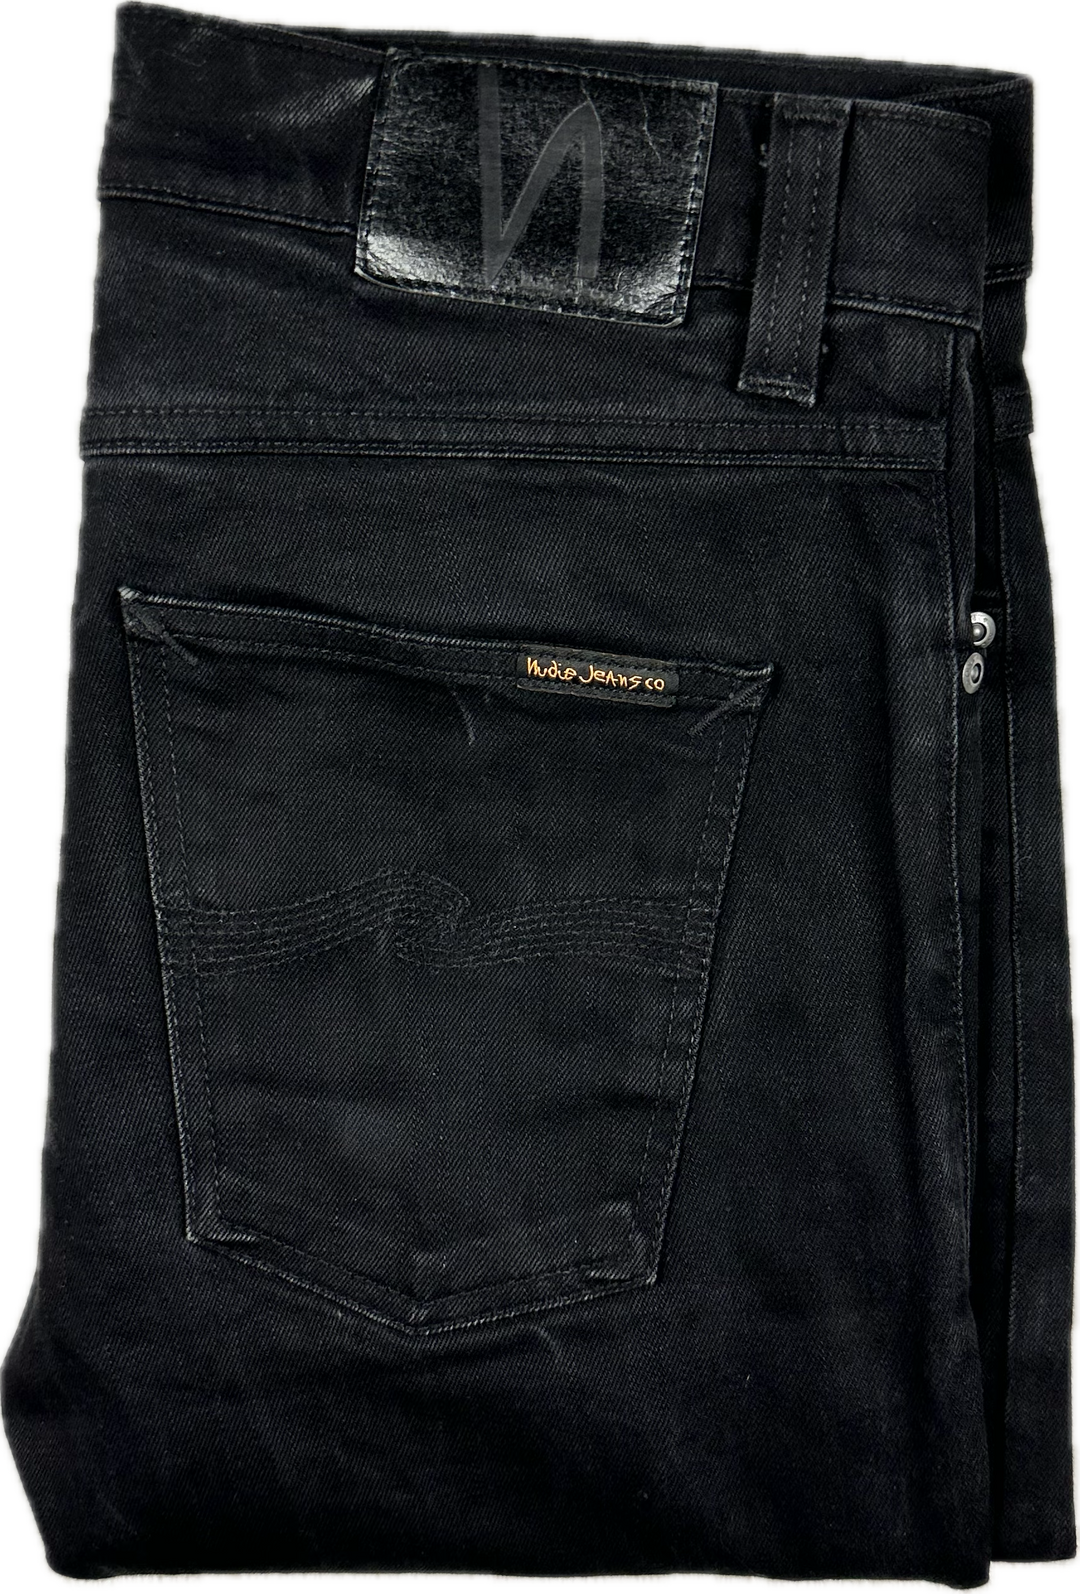 Nudie 'Lean Dean' Dry Cold  Black Wash Organic Jeans- Size 31/30